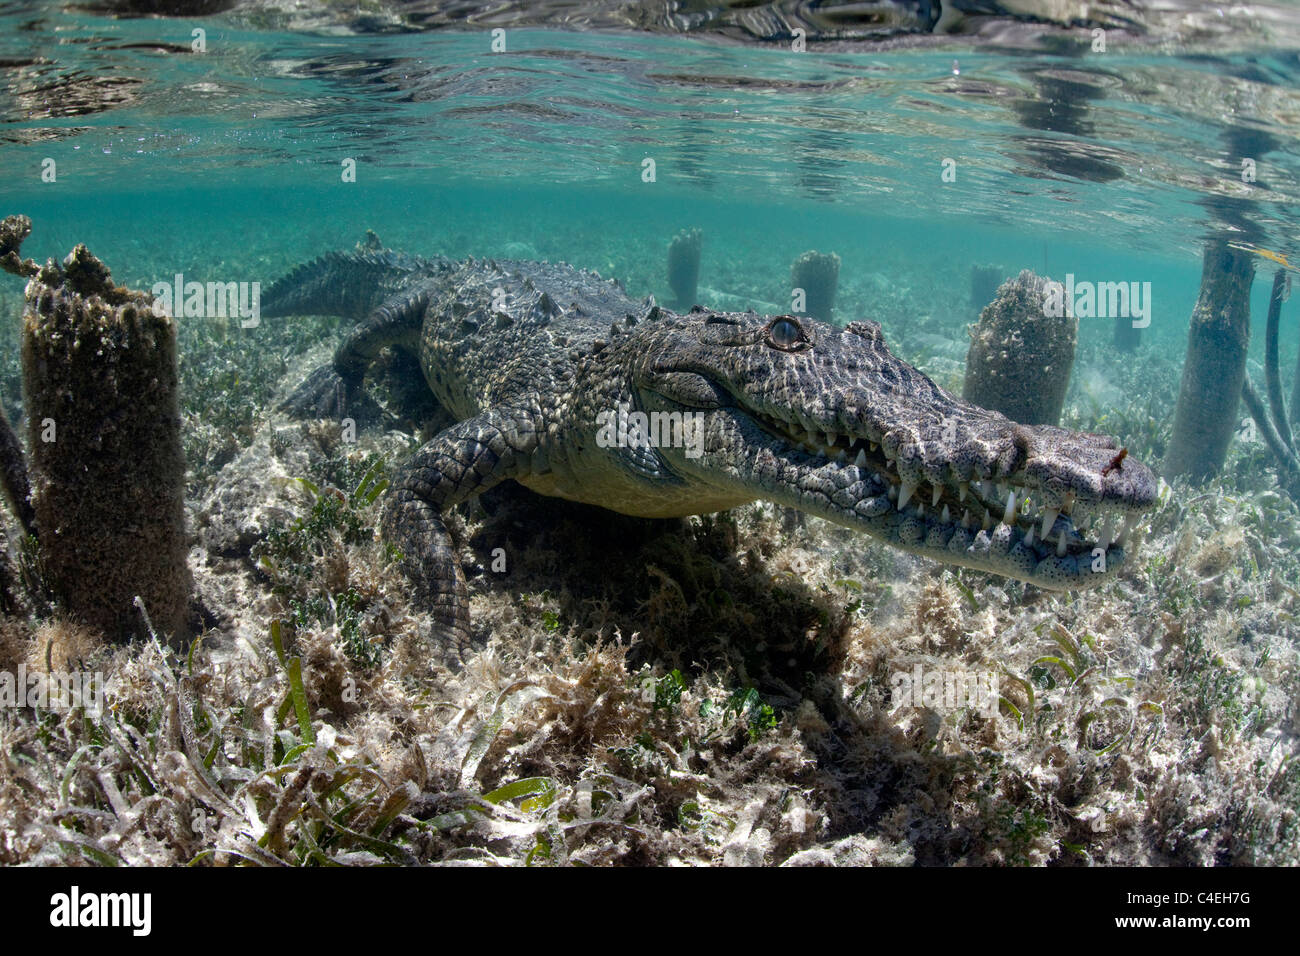 A Cuban Crocodile underwater in Cuba. Stock Photo